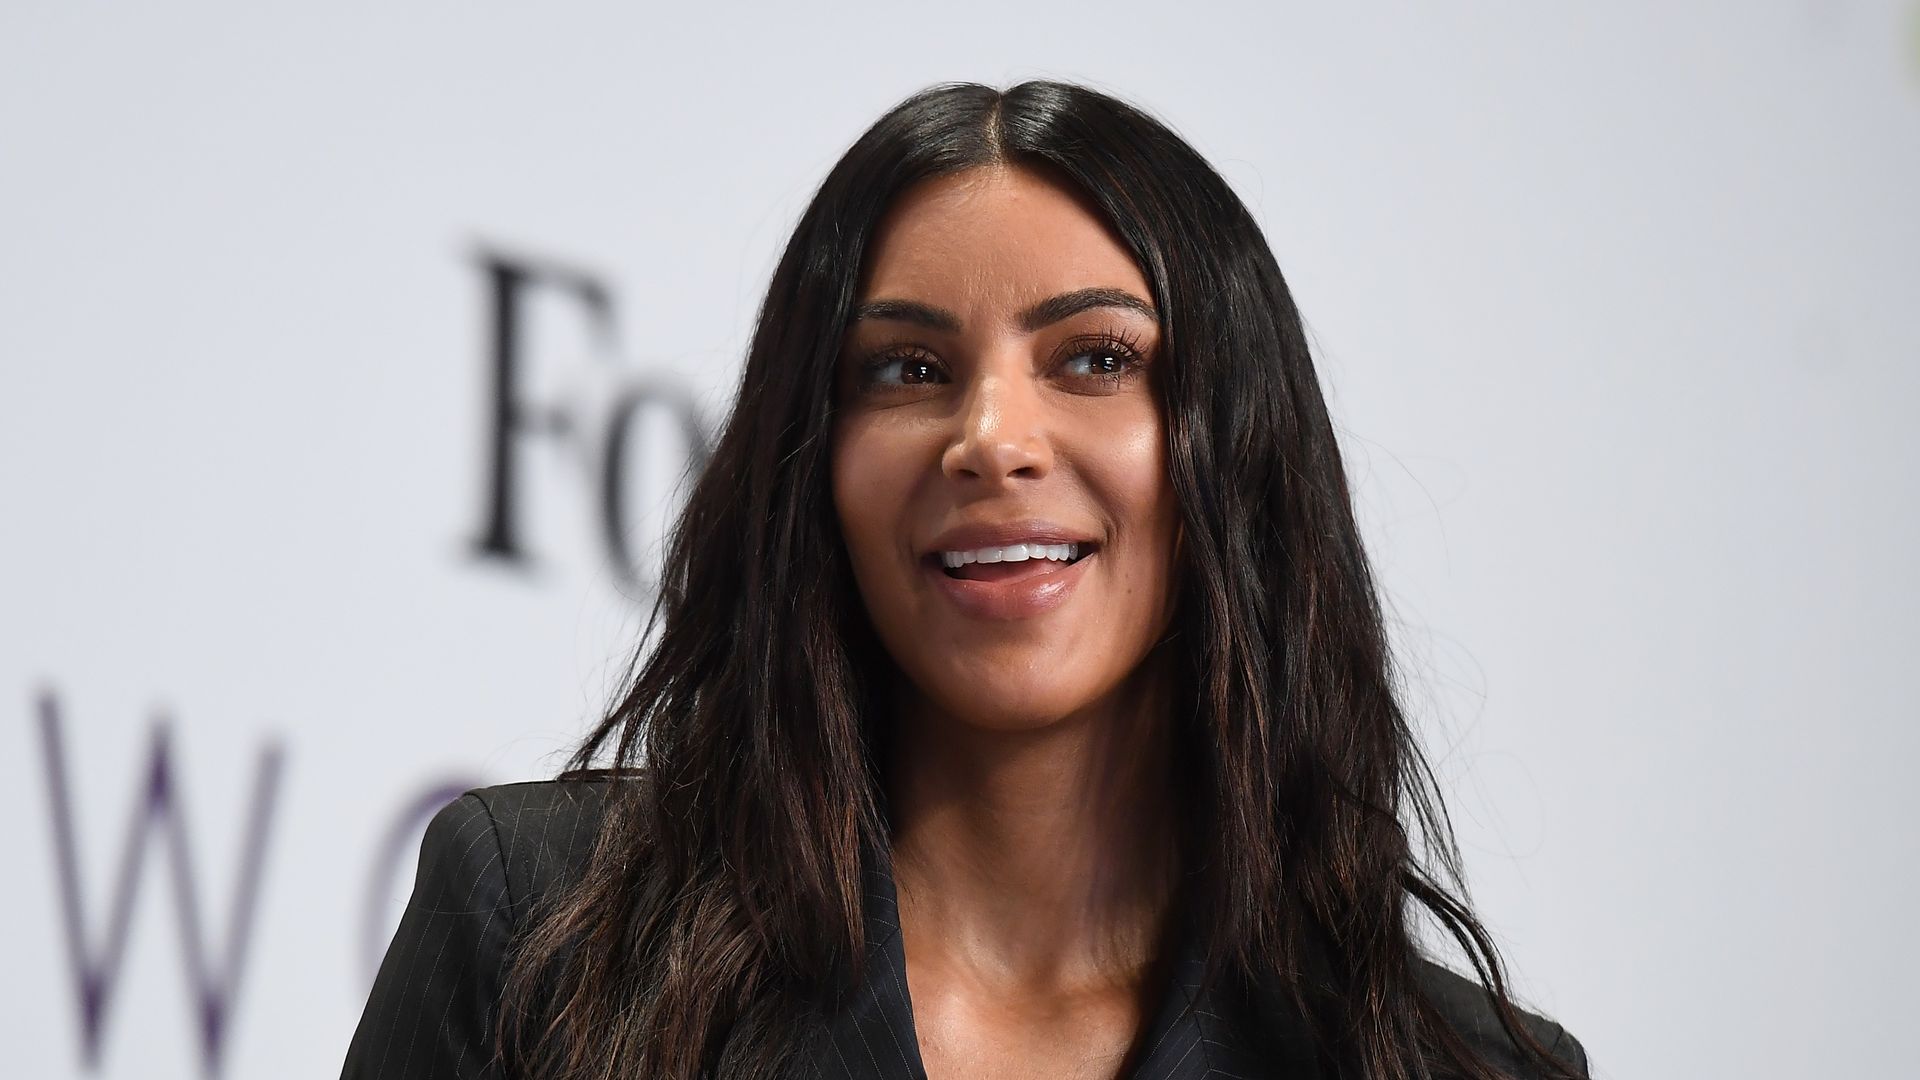 Kim Kardashian in a black jacket smiling